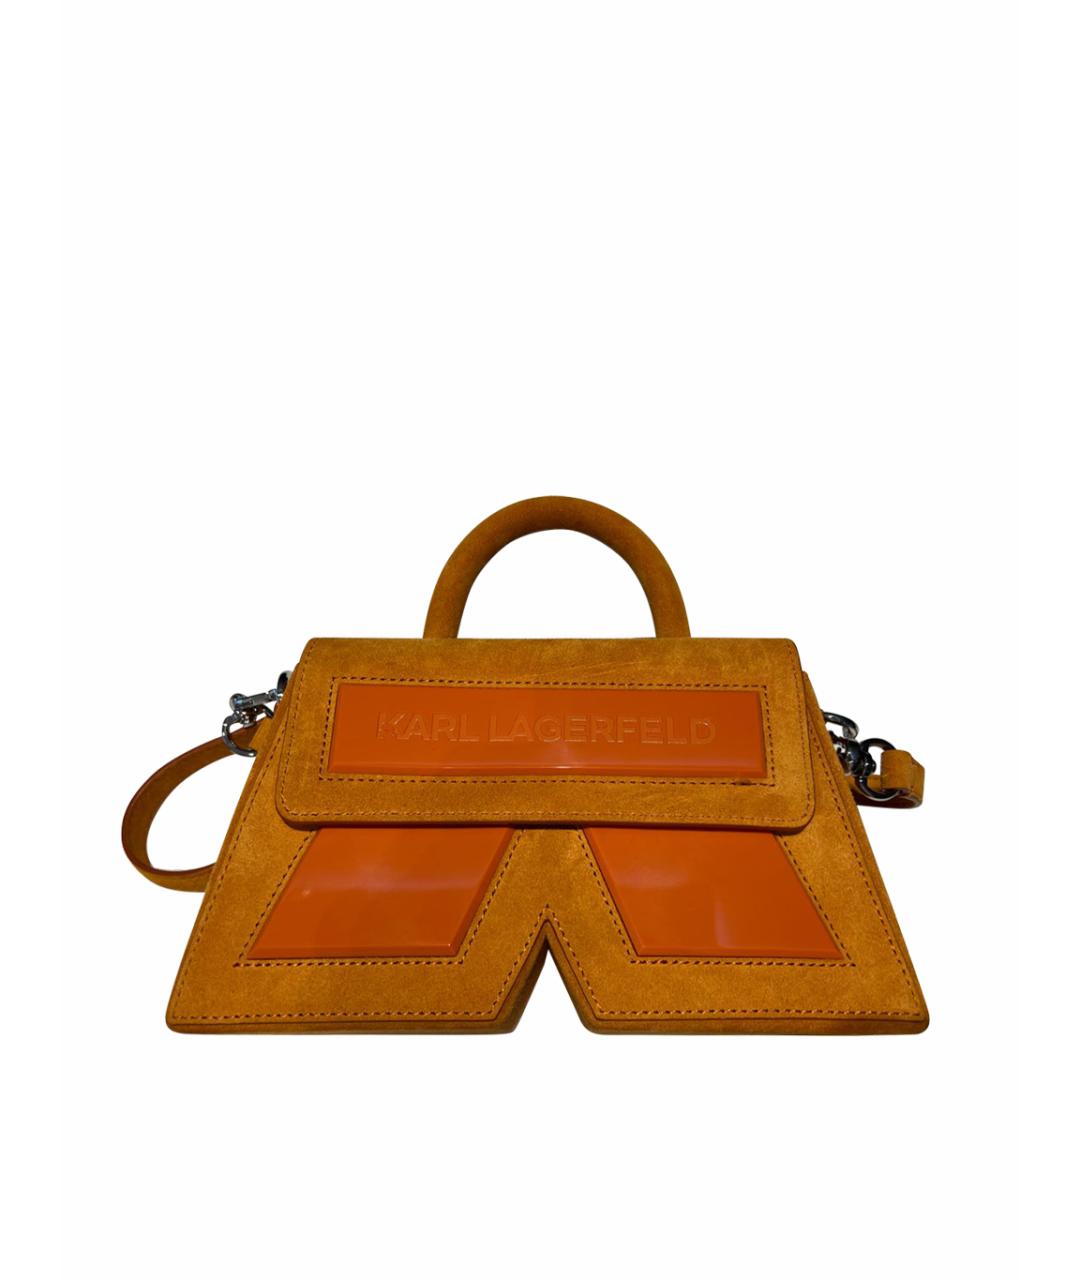 KARL LAGERFELD Оранжевая замшевая сумка с короткими ручками, фото 1